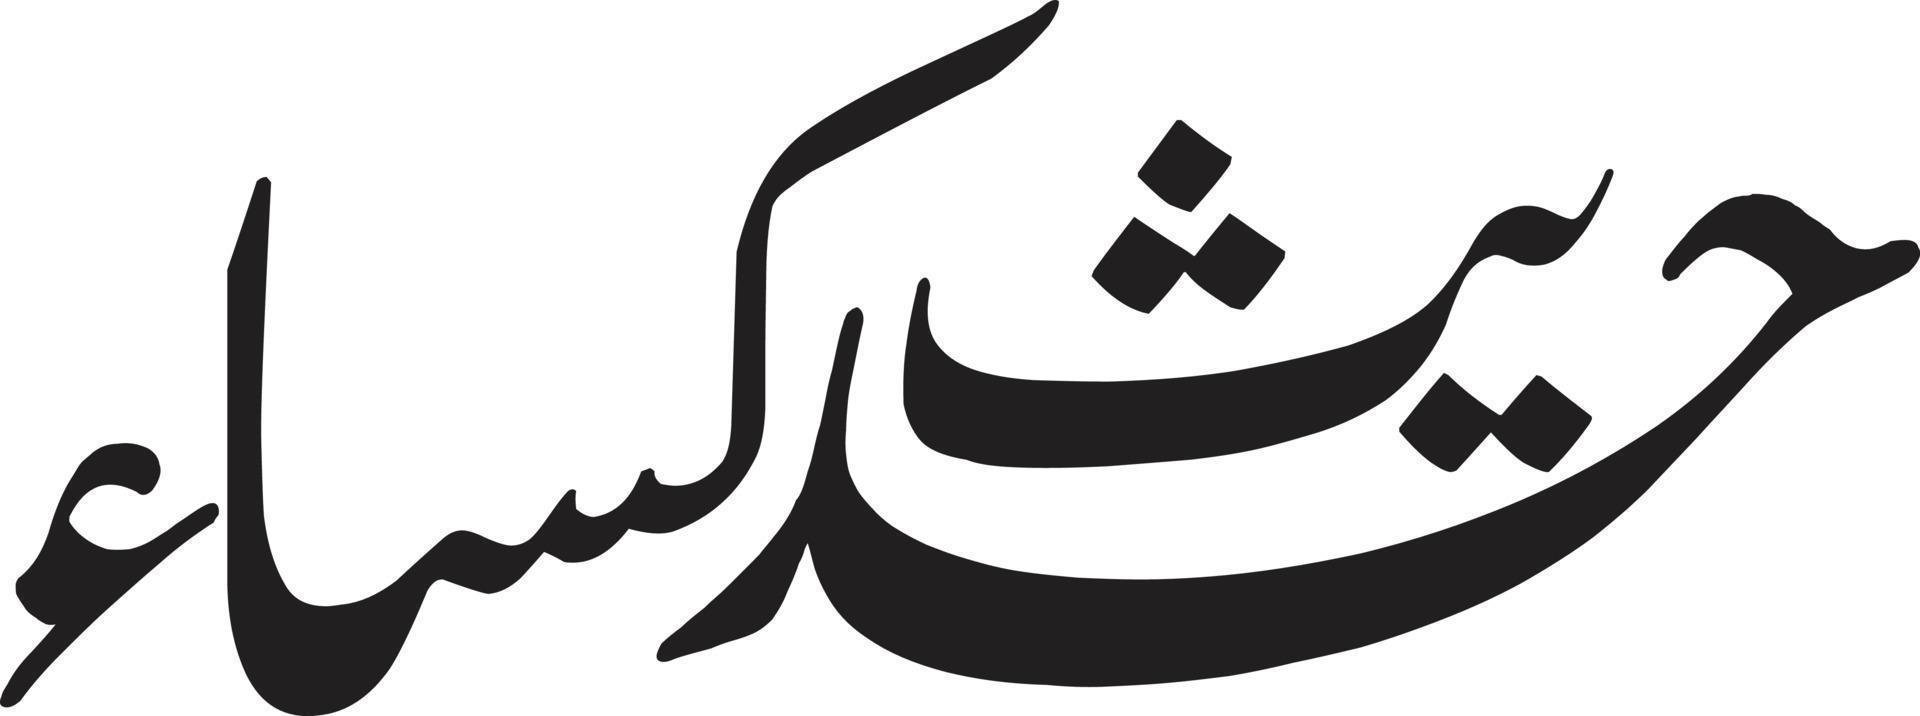 hdeess kisa título caligrafia islâmica vetor livre